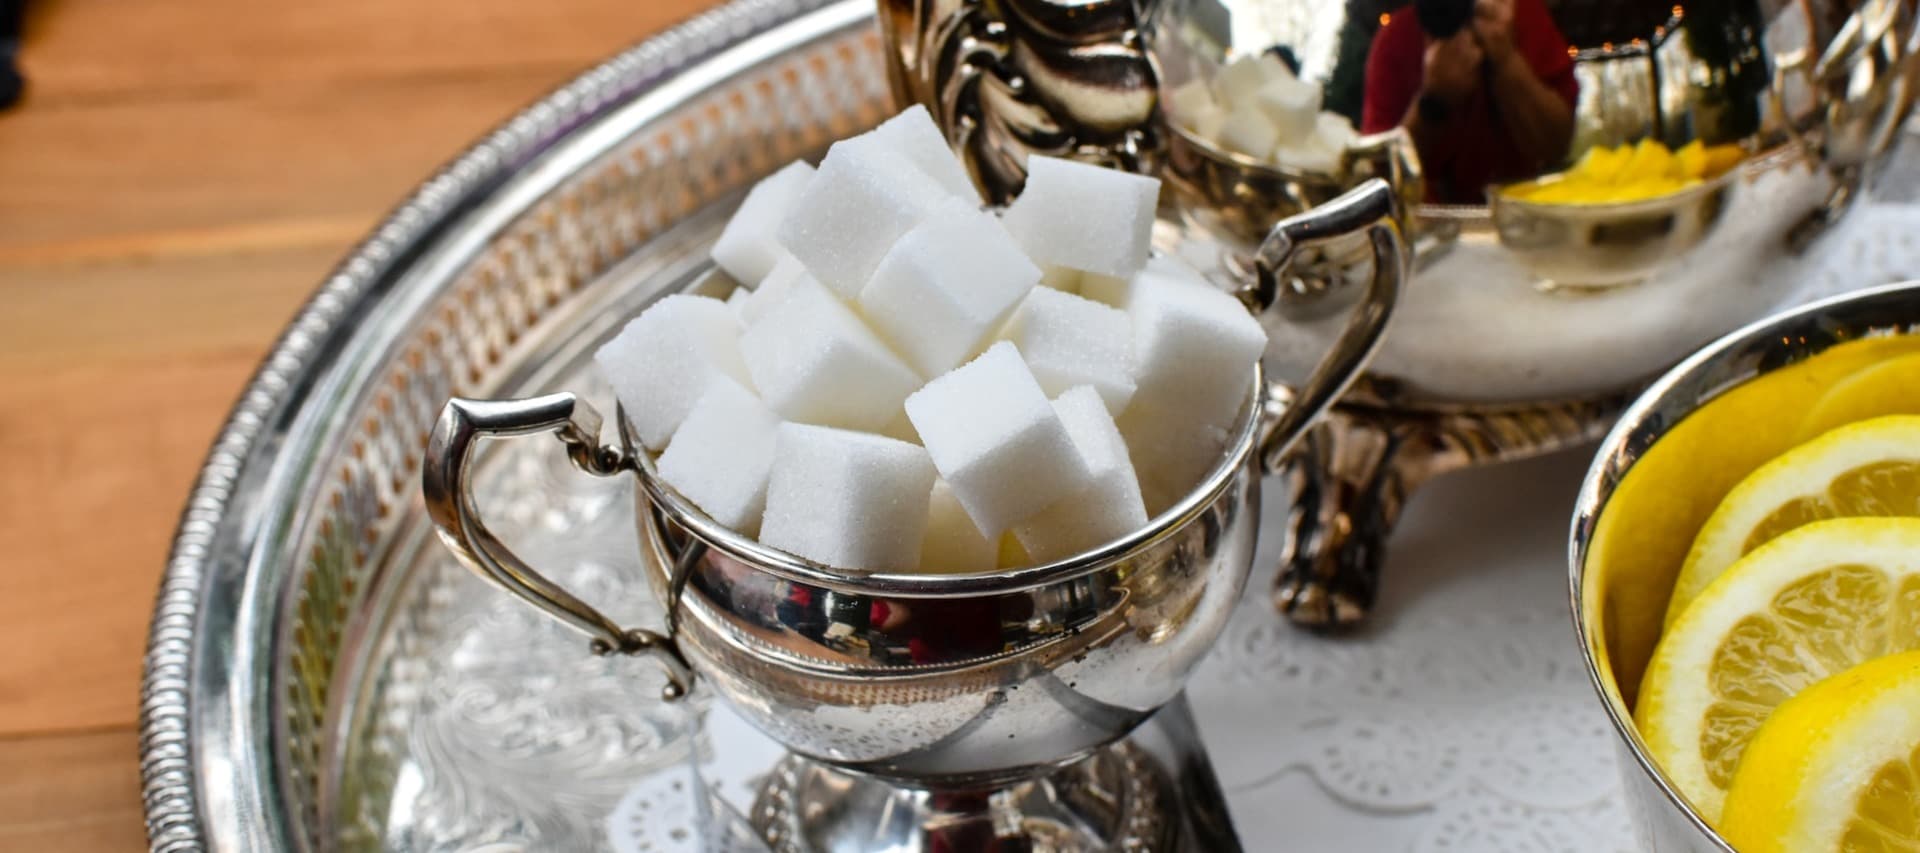 Фото новости: "Кондитеры пожаловались на рост цен на сахар"